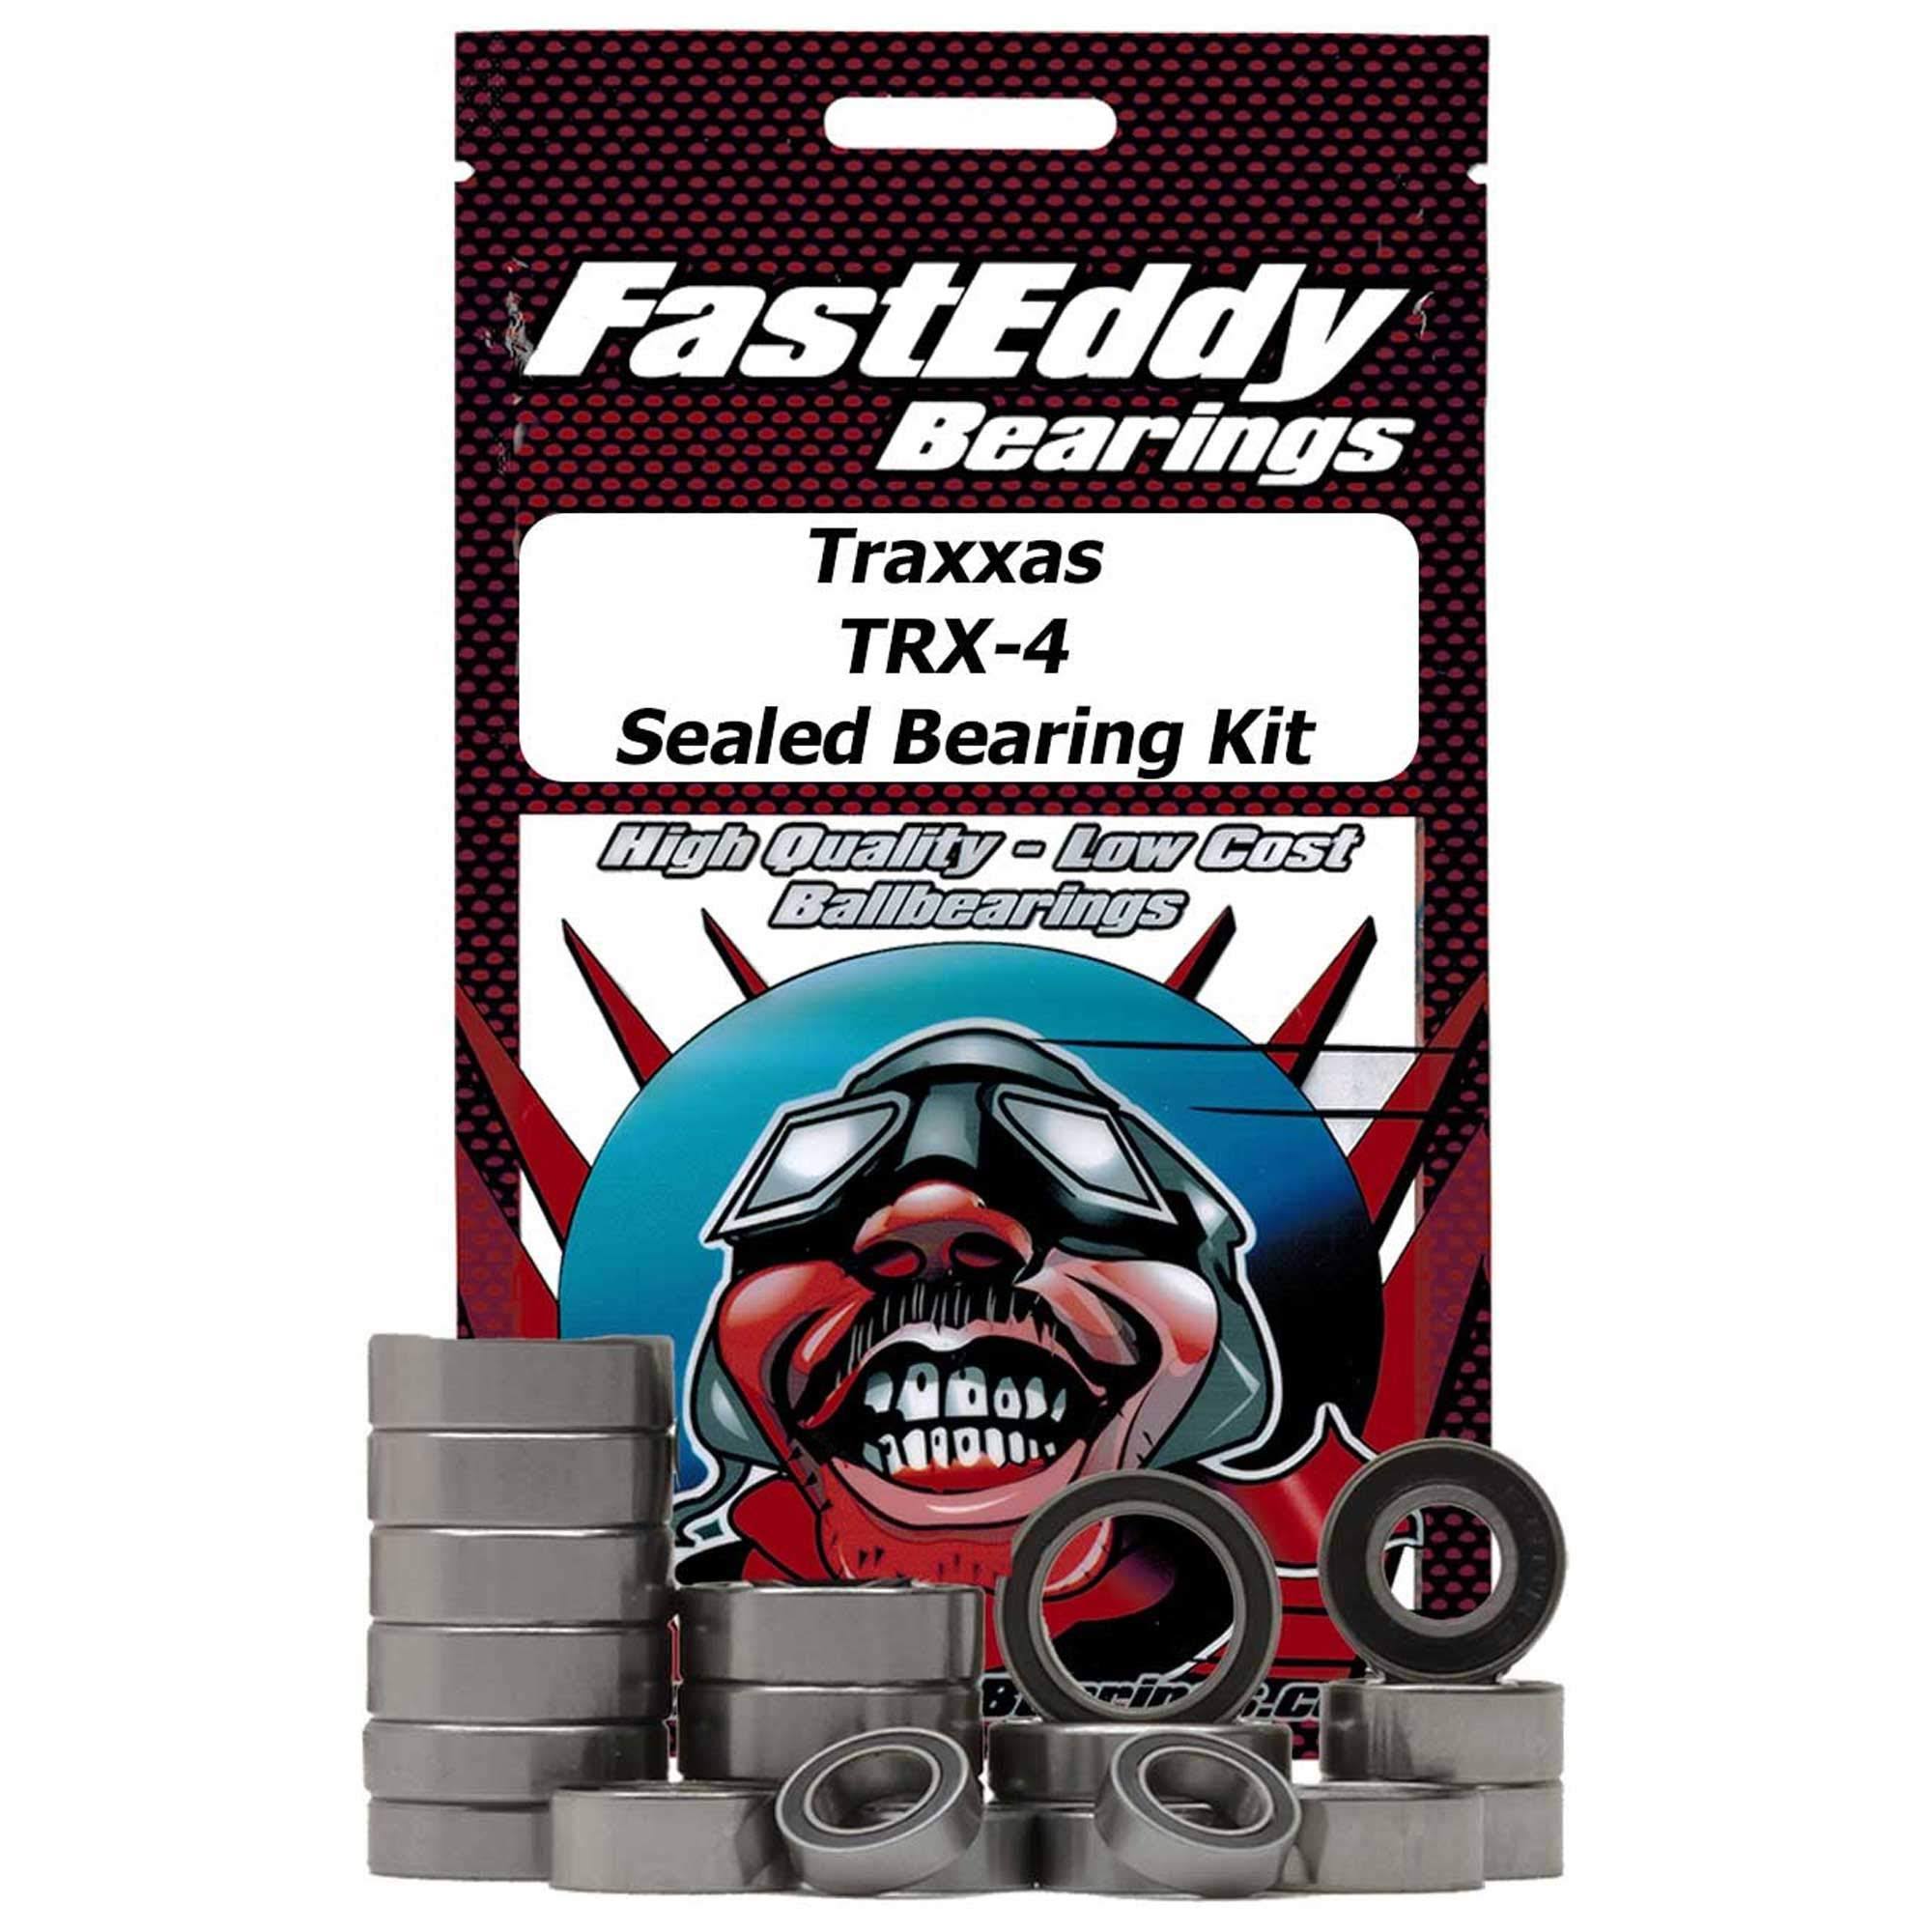 Fast Eddy TFE4522 Sealed Bearing Kit For Traxxas TRX-4